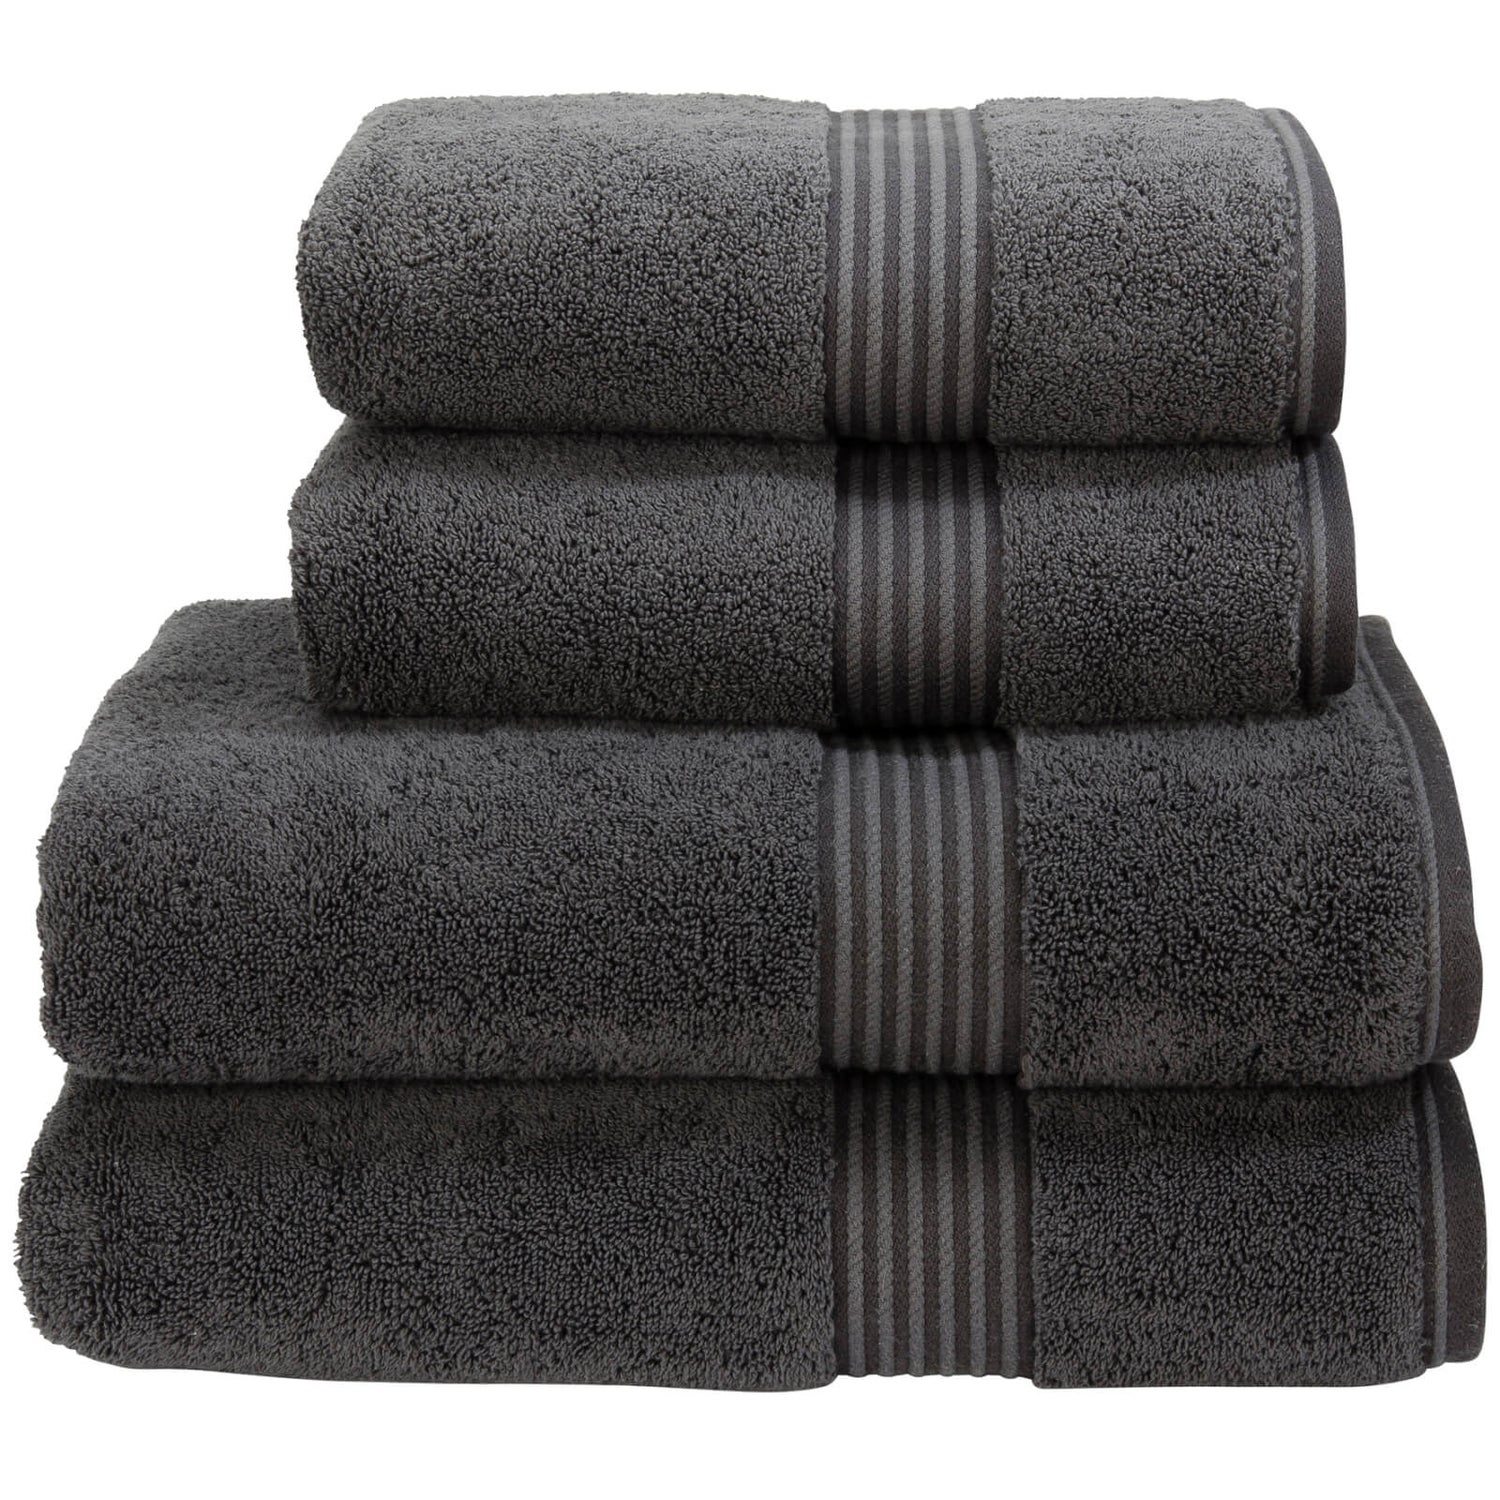 Christy Supreme Hygro Towels - Graphite - Bath Towel (Set of 2)